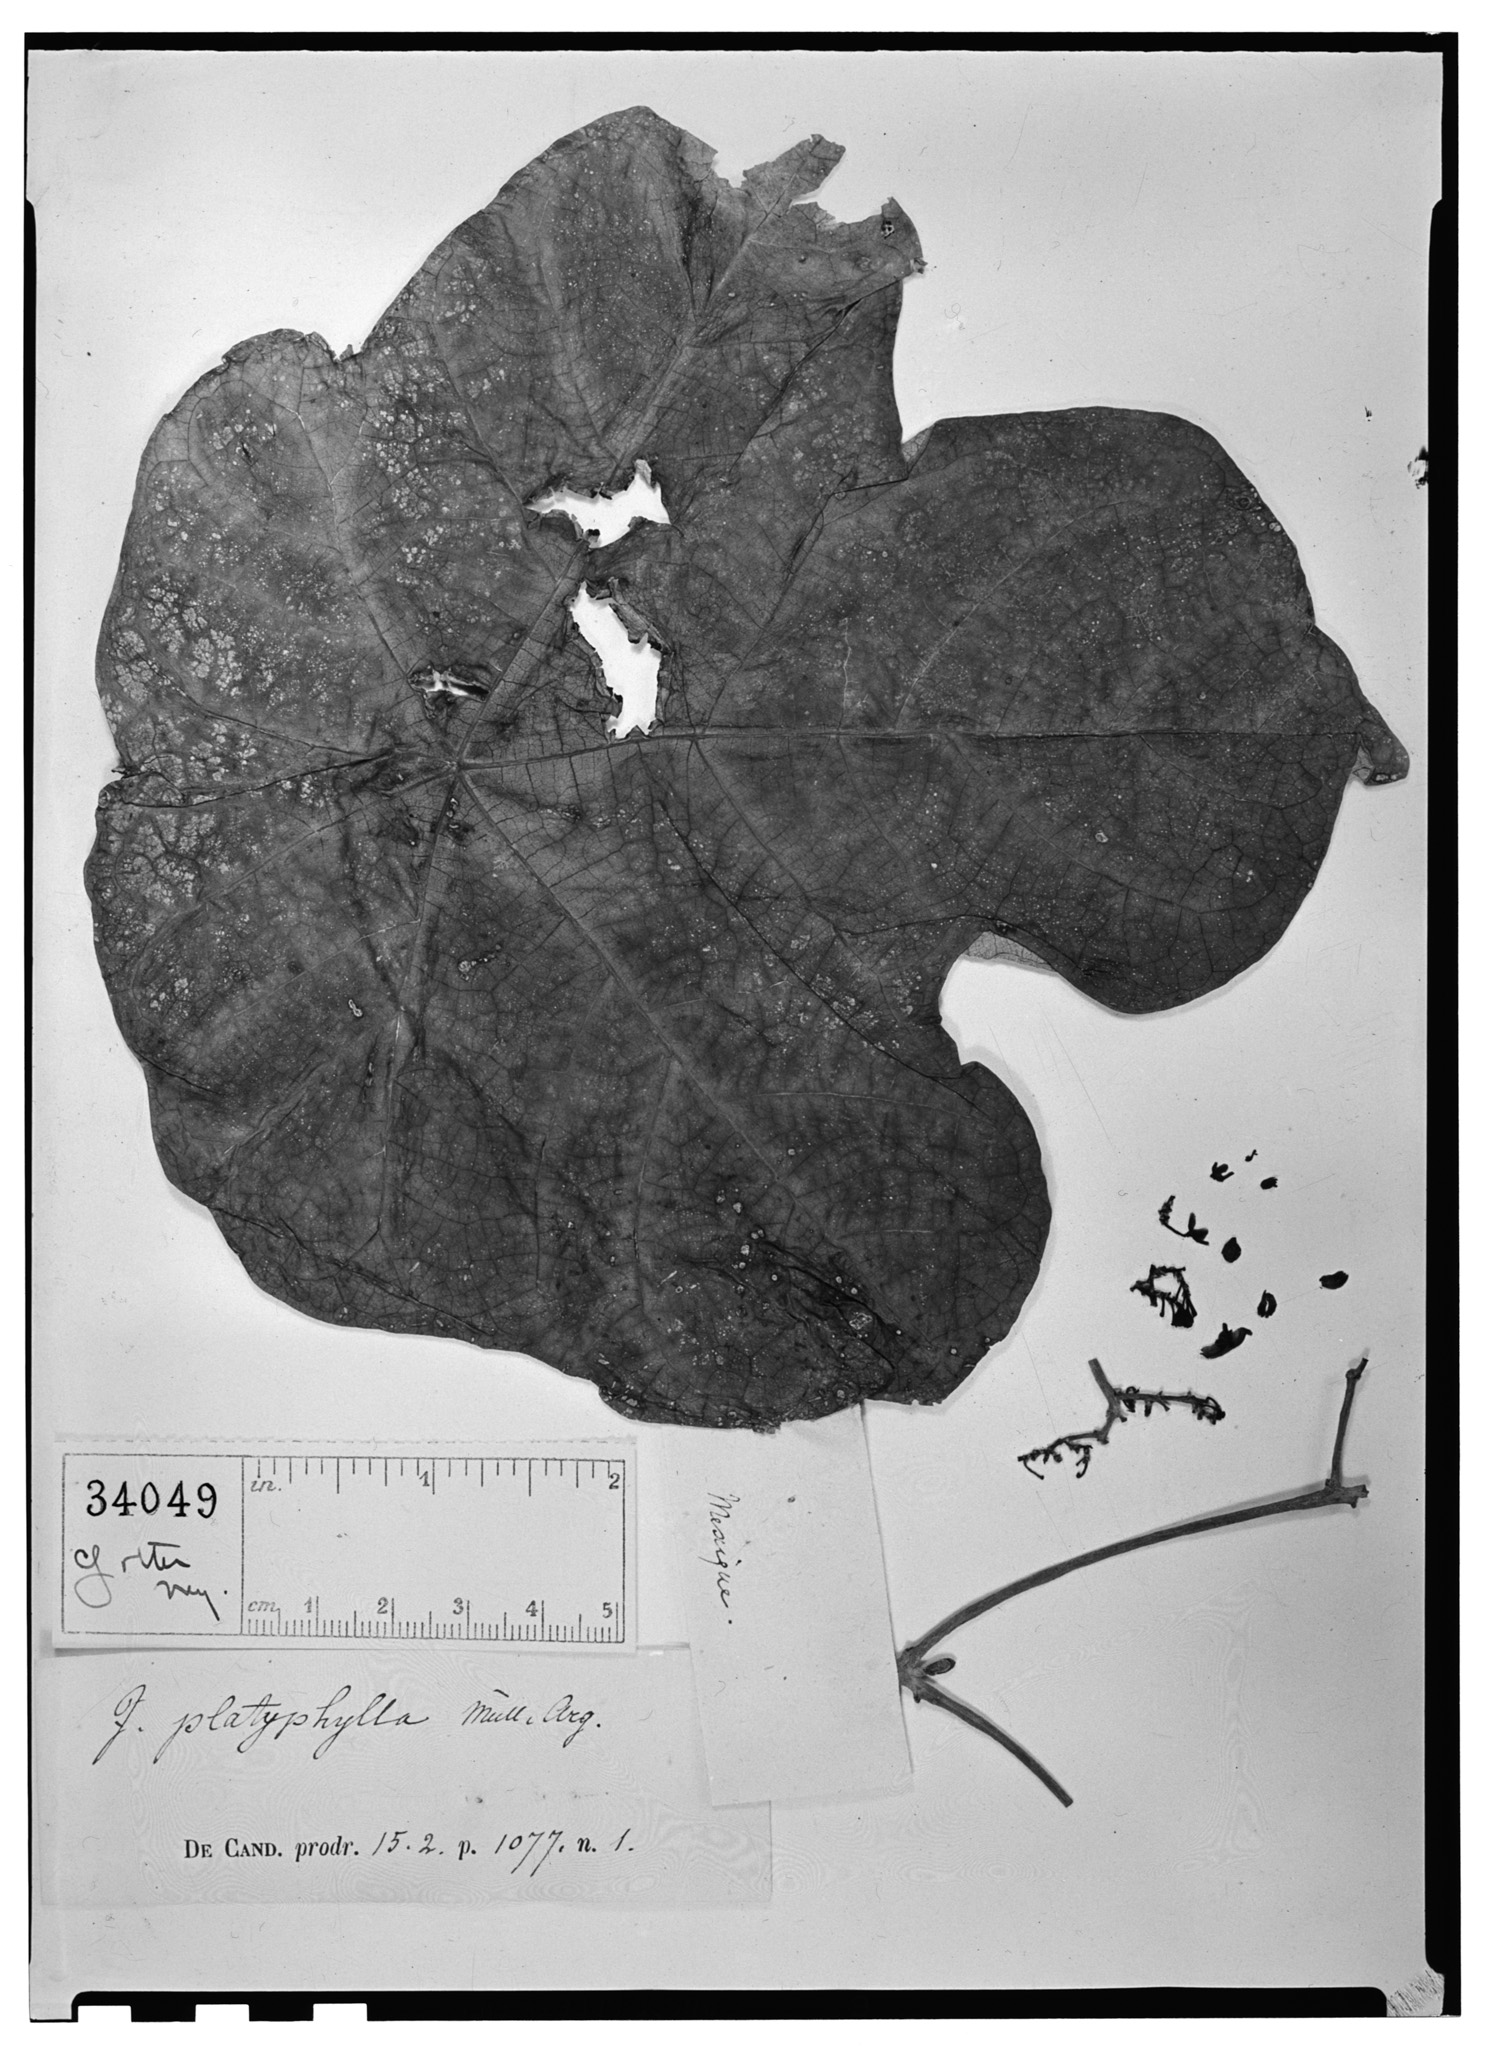 Jatropha platyphylla image